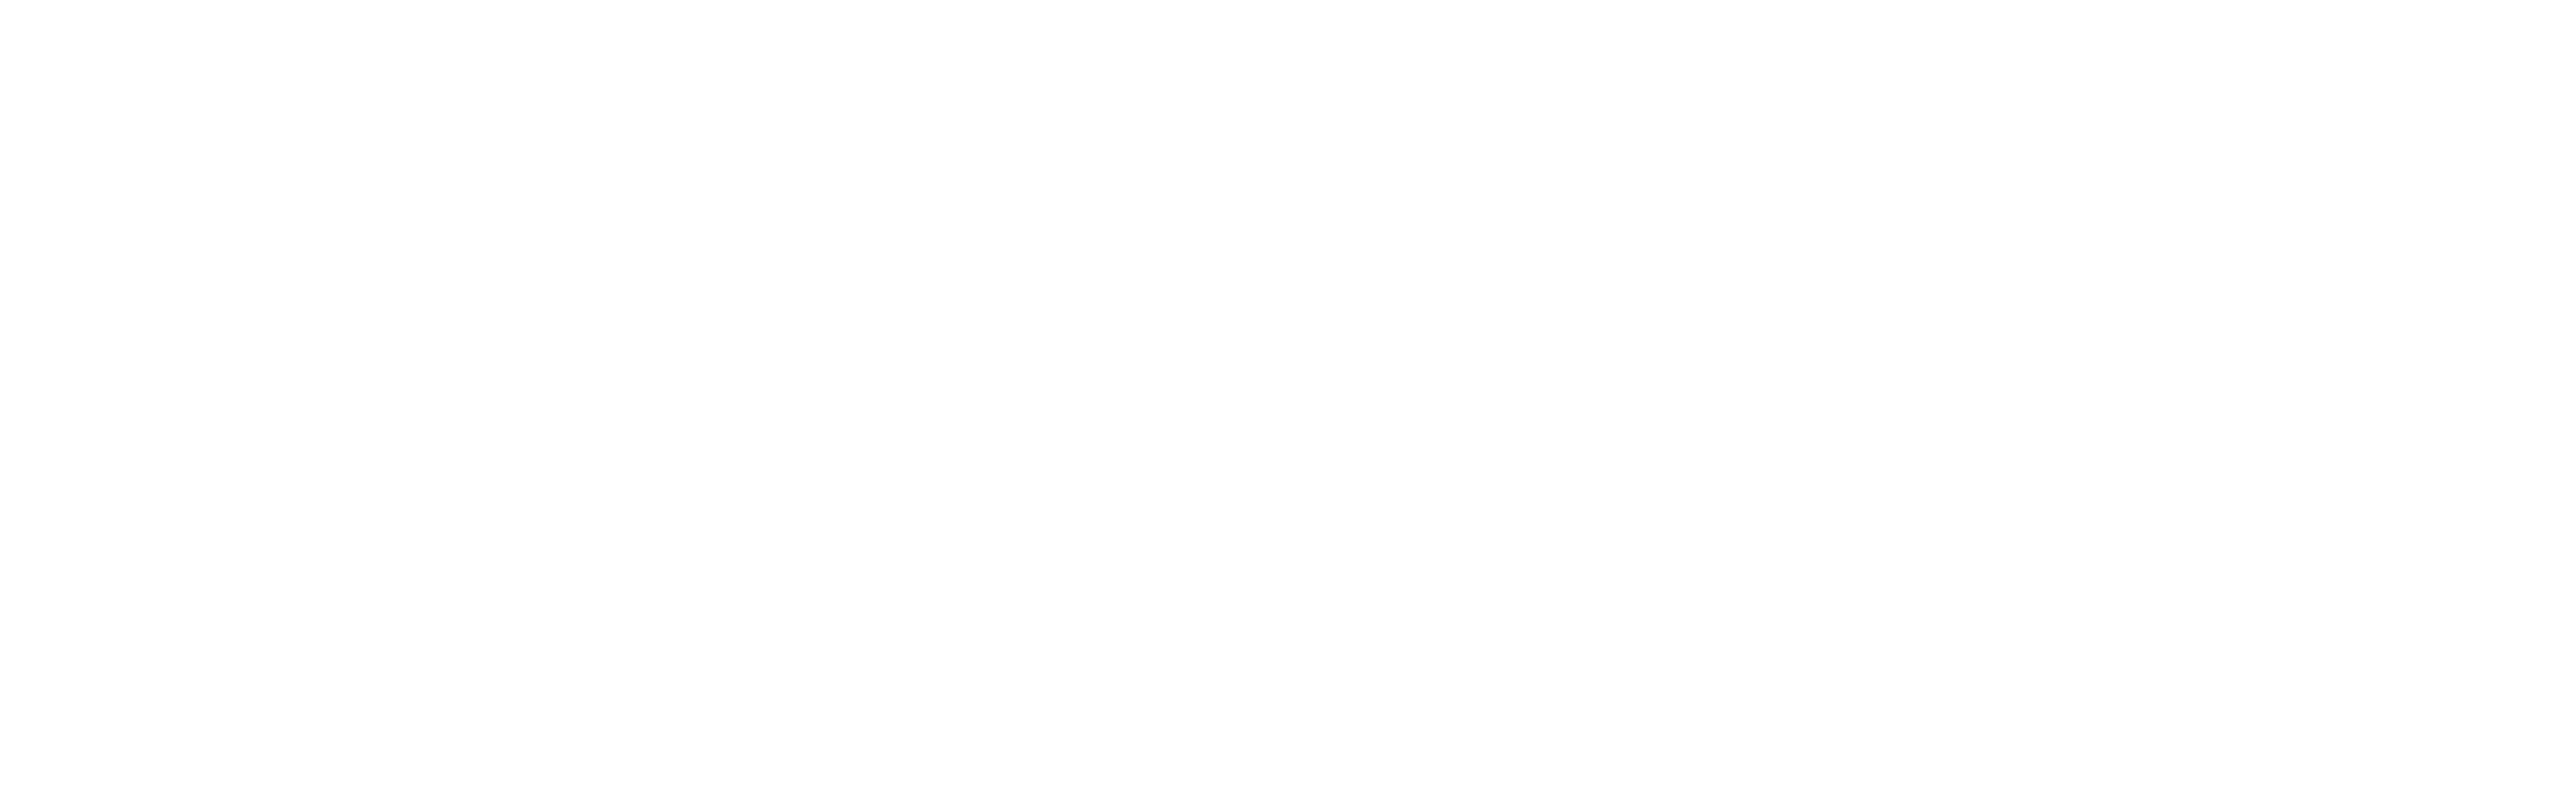 INCOACH Horizontal Lockup - White